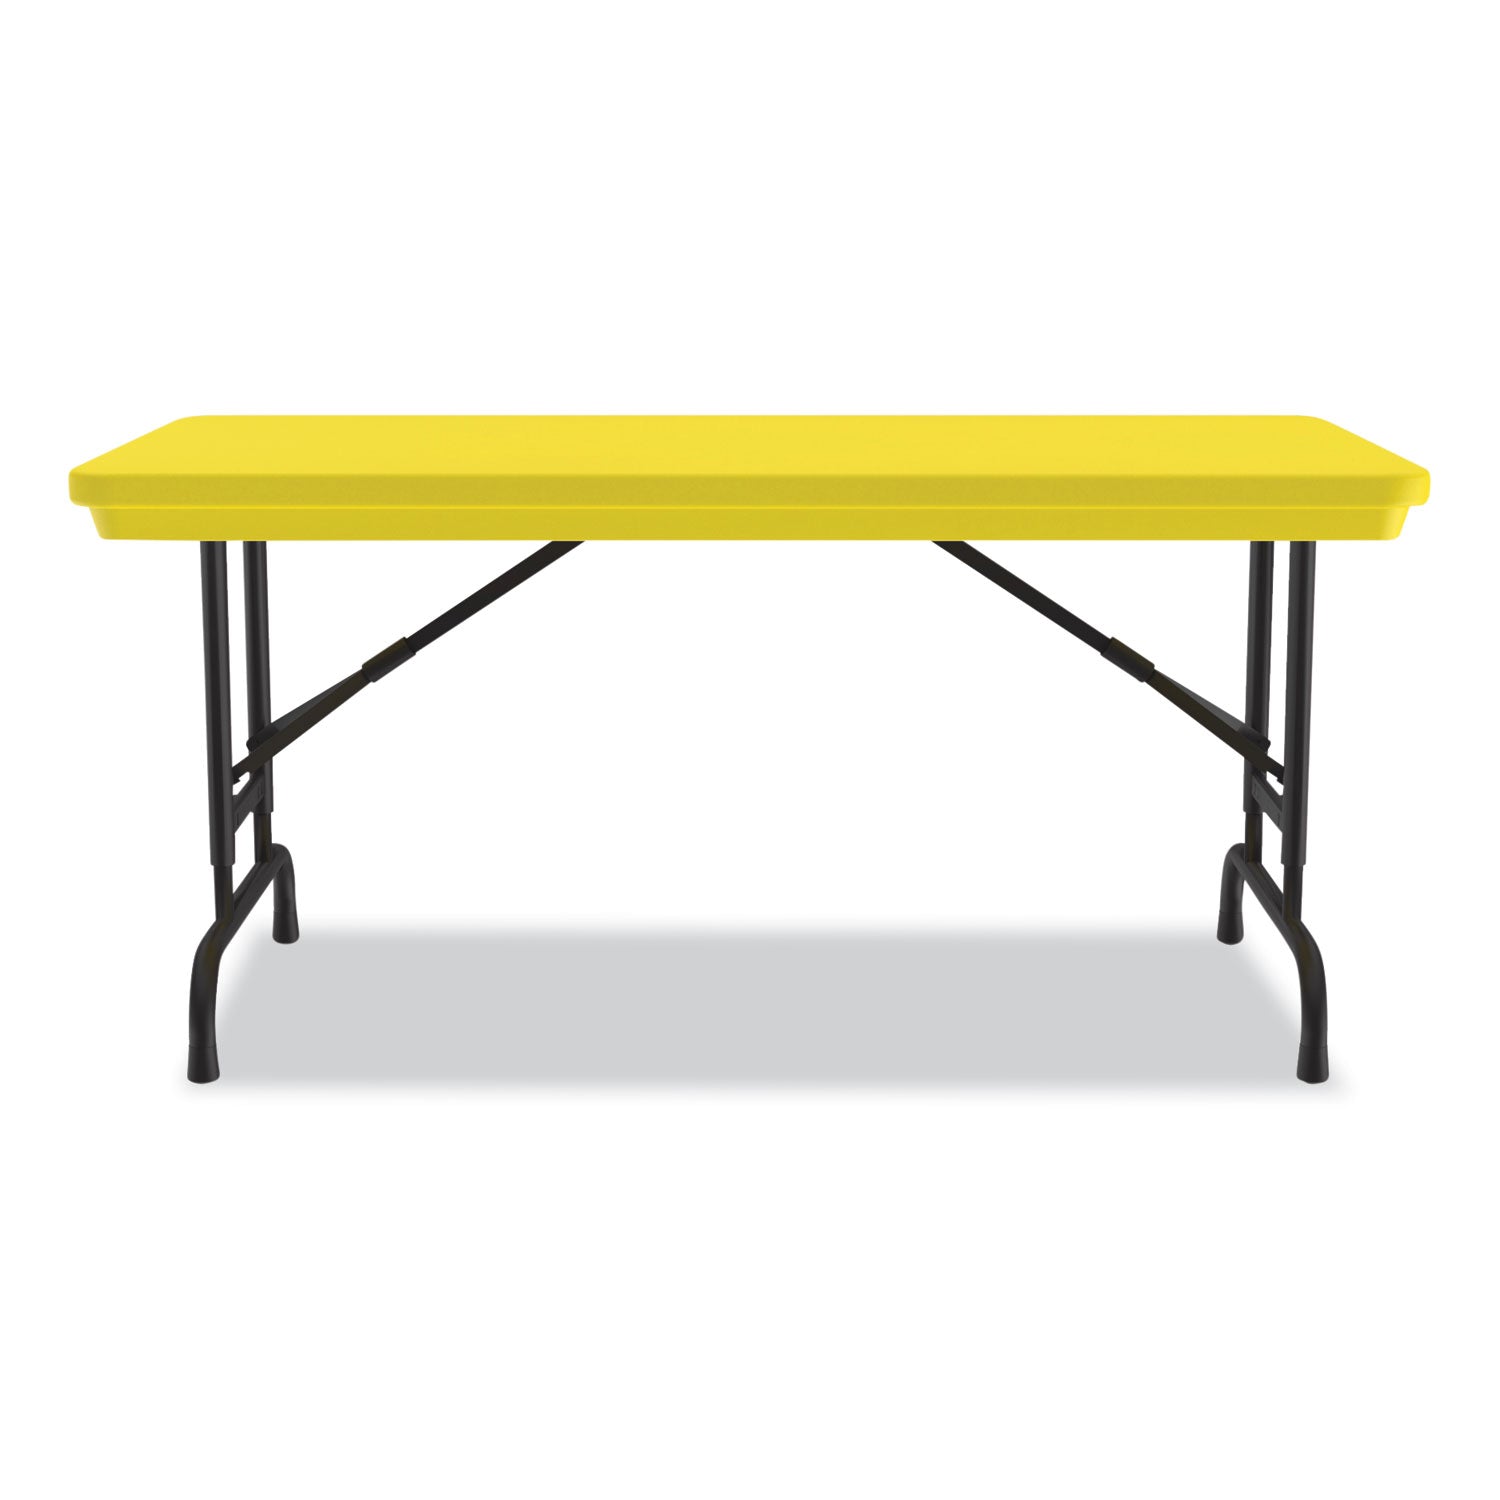 adjustable-folding-table-rectangular-48-x-24-x-22-to-32-yellow-top-black-legs-4-pallet-ships-in-4-6-business-days_crlra2448284p - 7